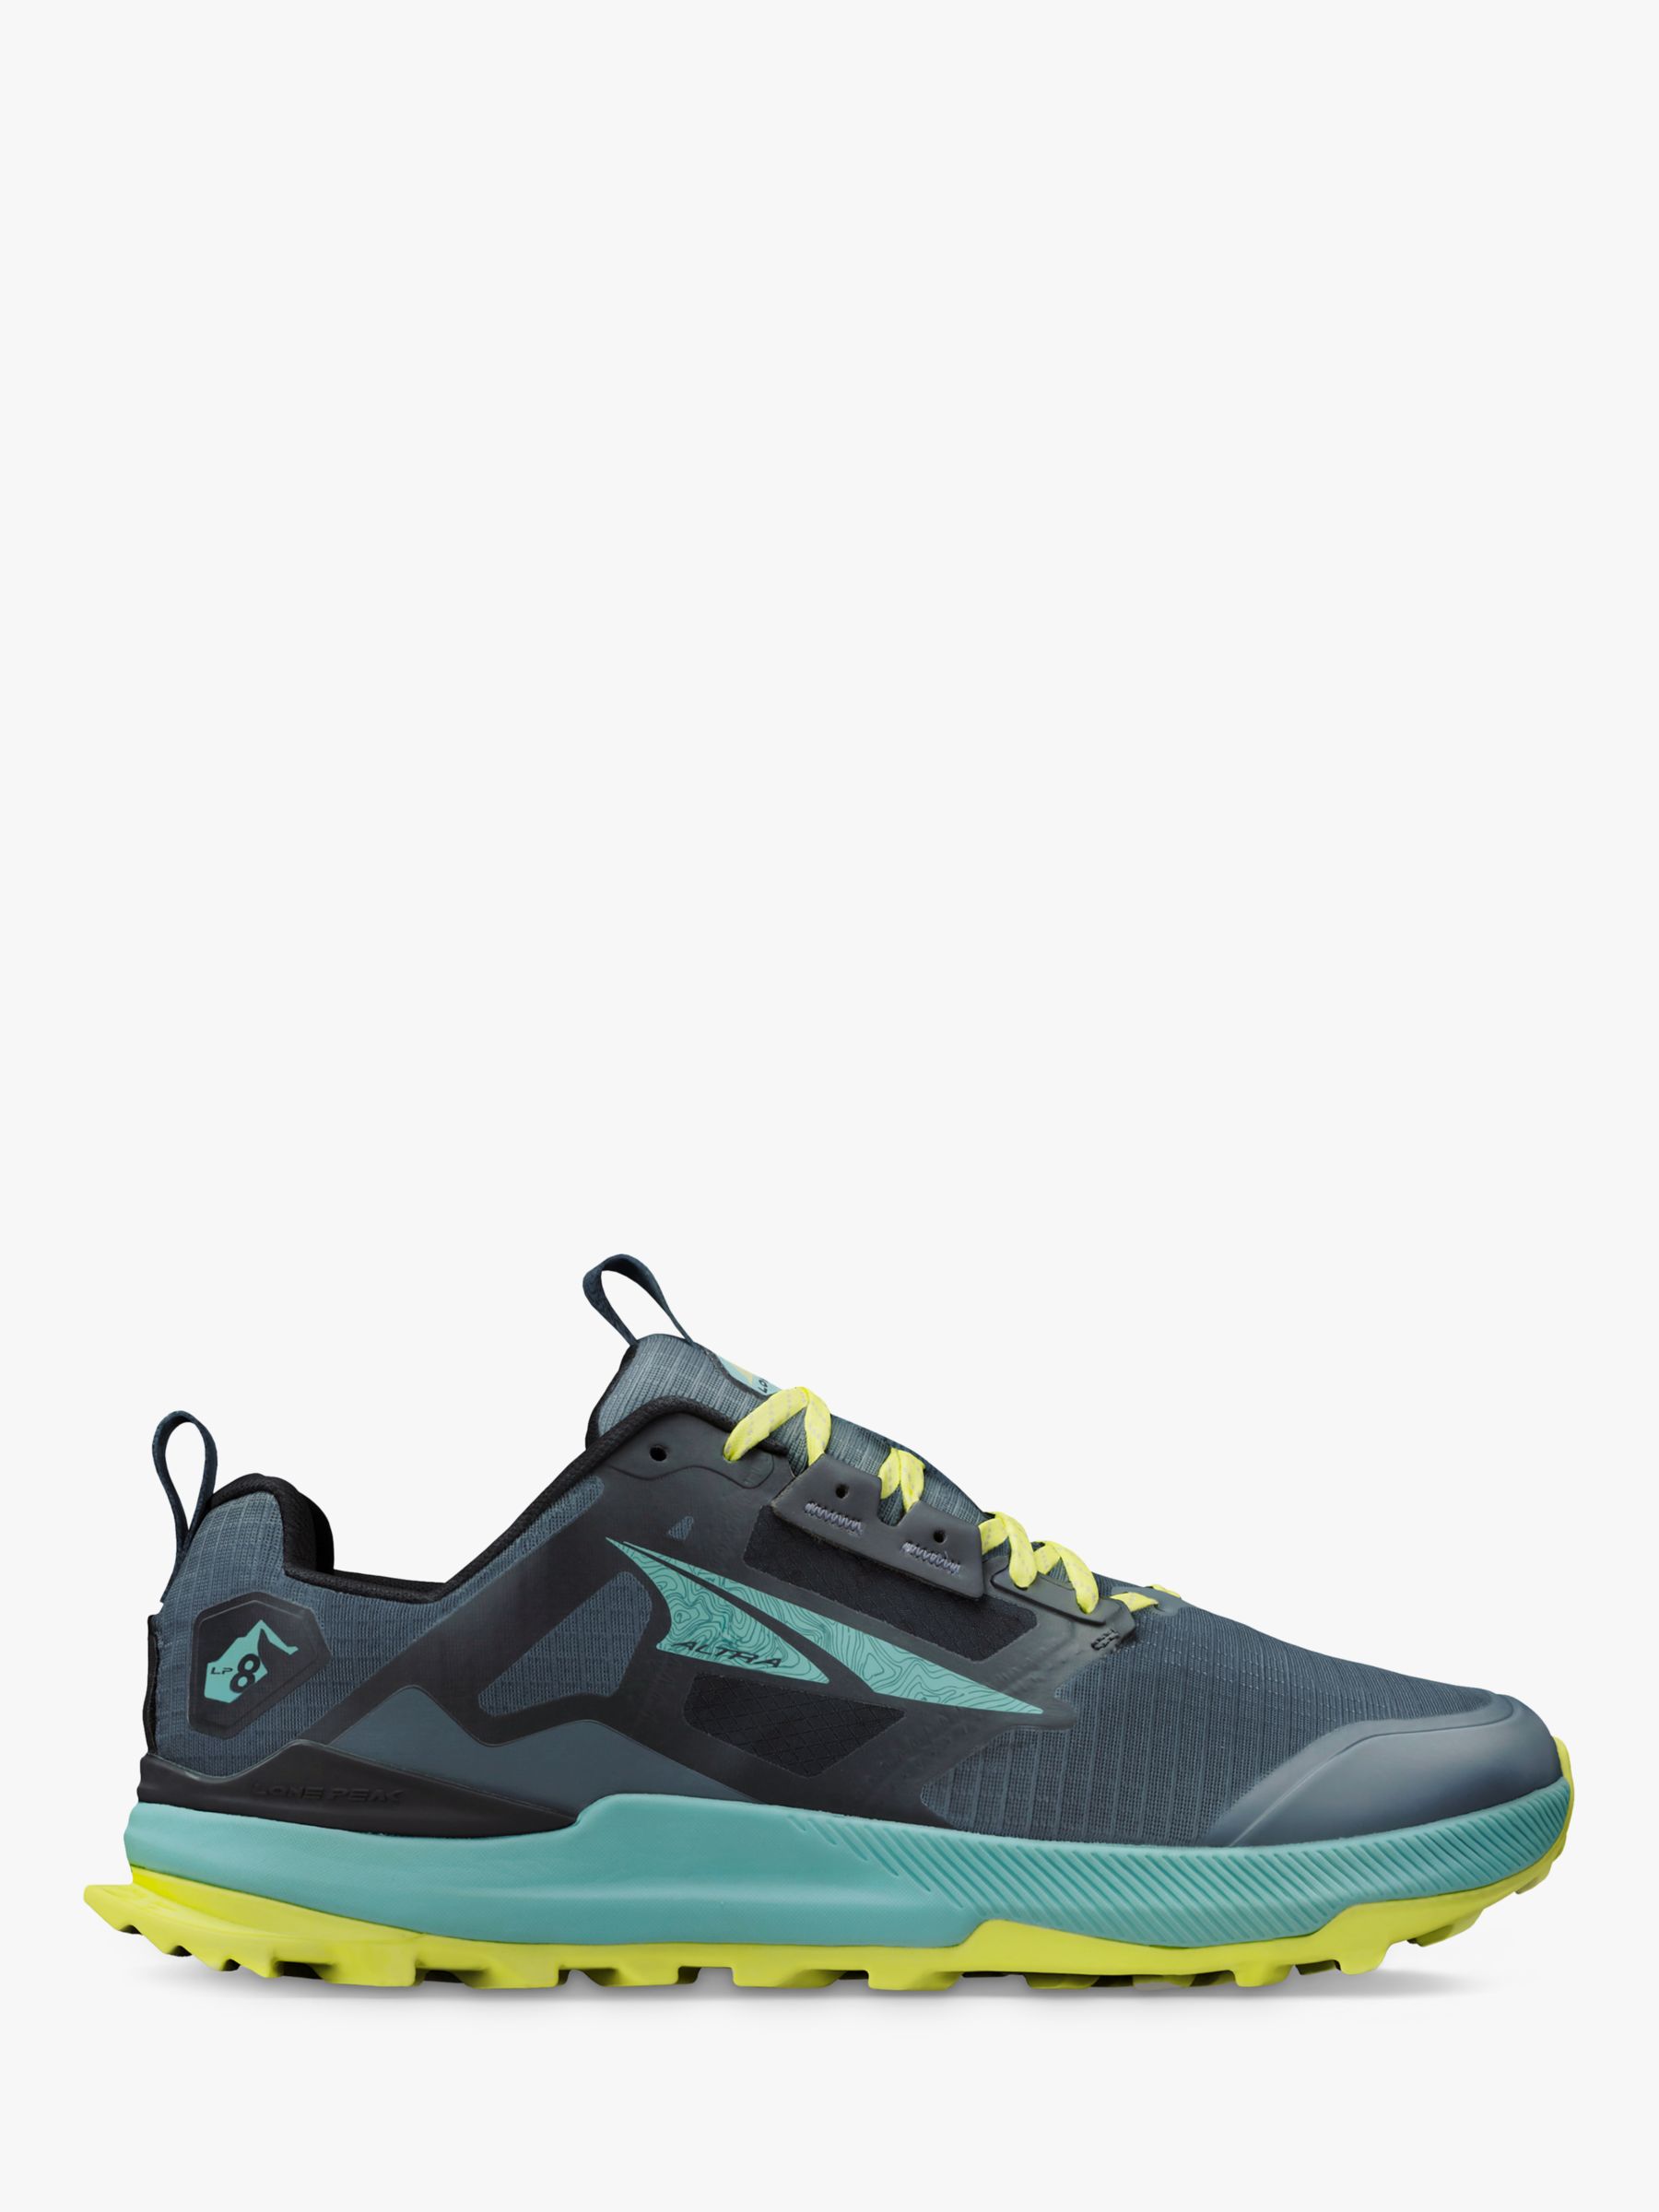 Altra Lone Peak 8  2 Men's Trail Running Shoes, Black/Green, 10